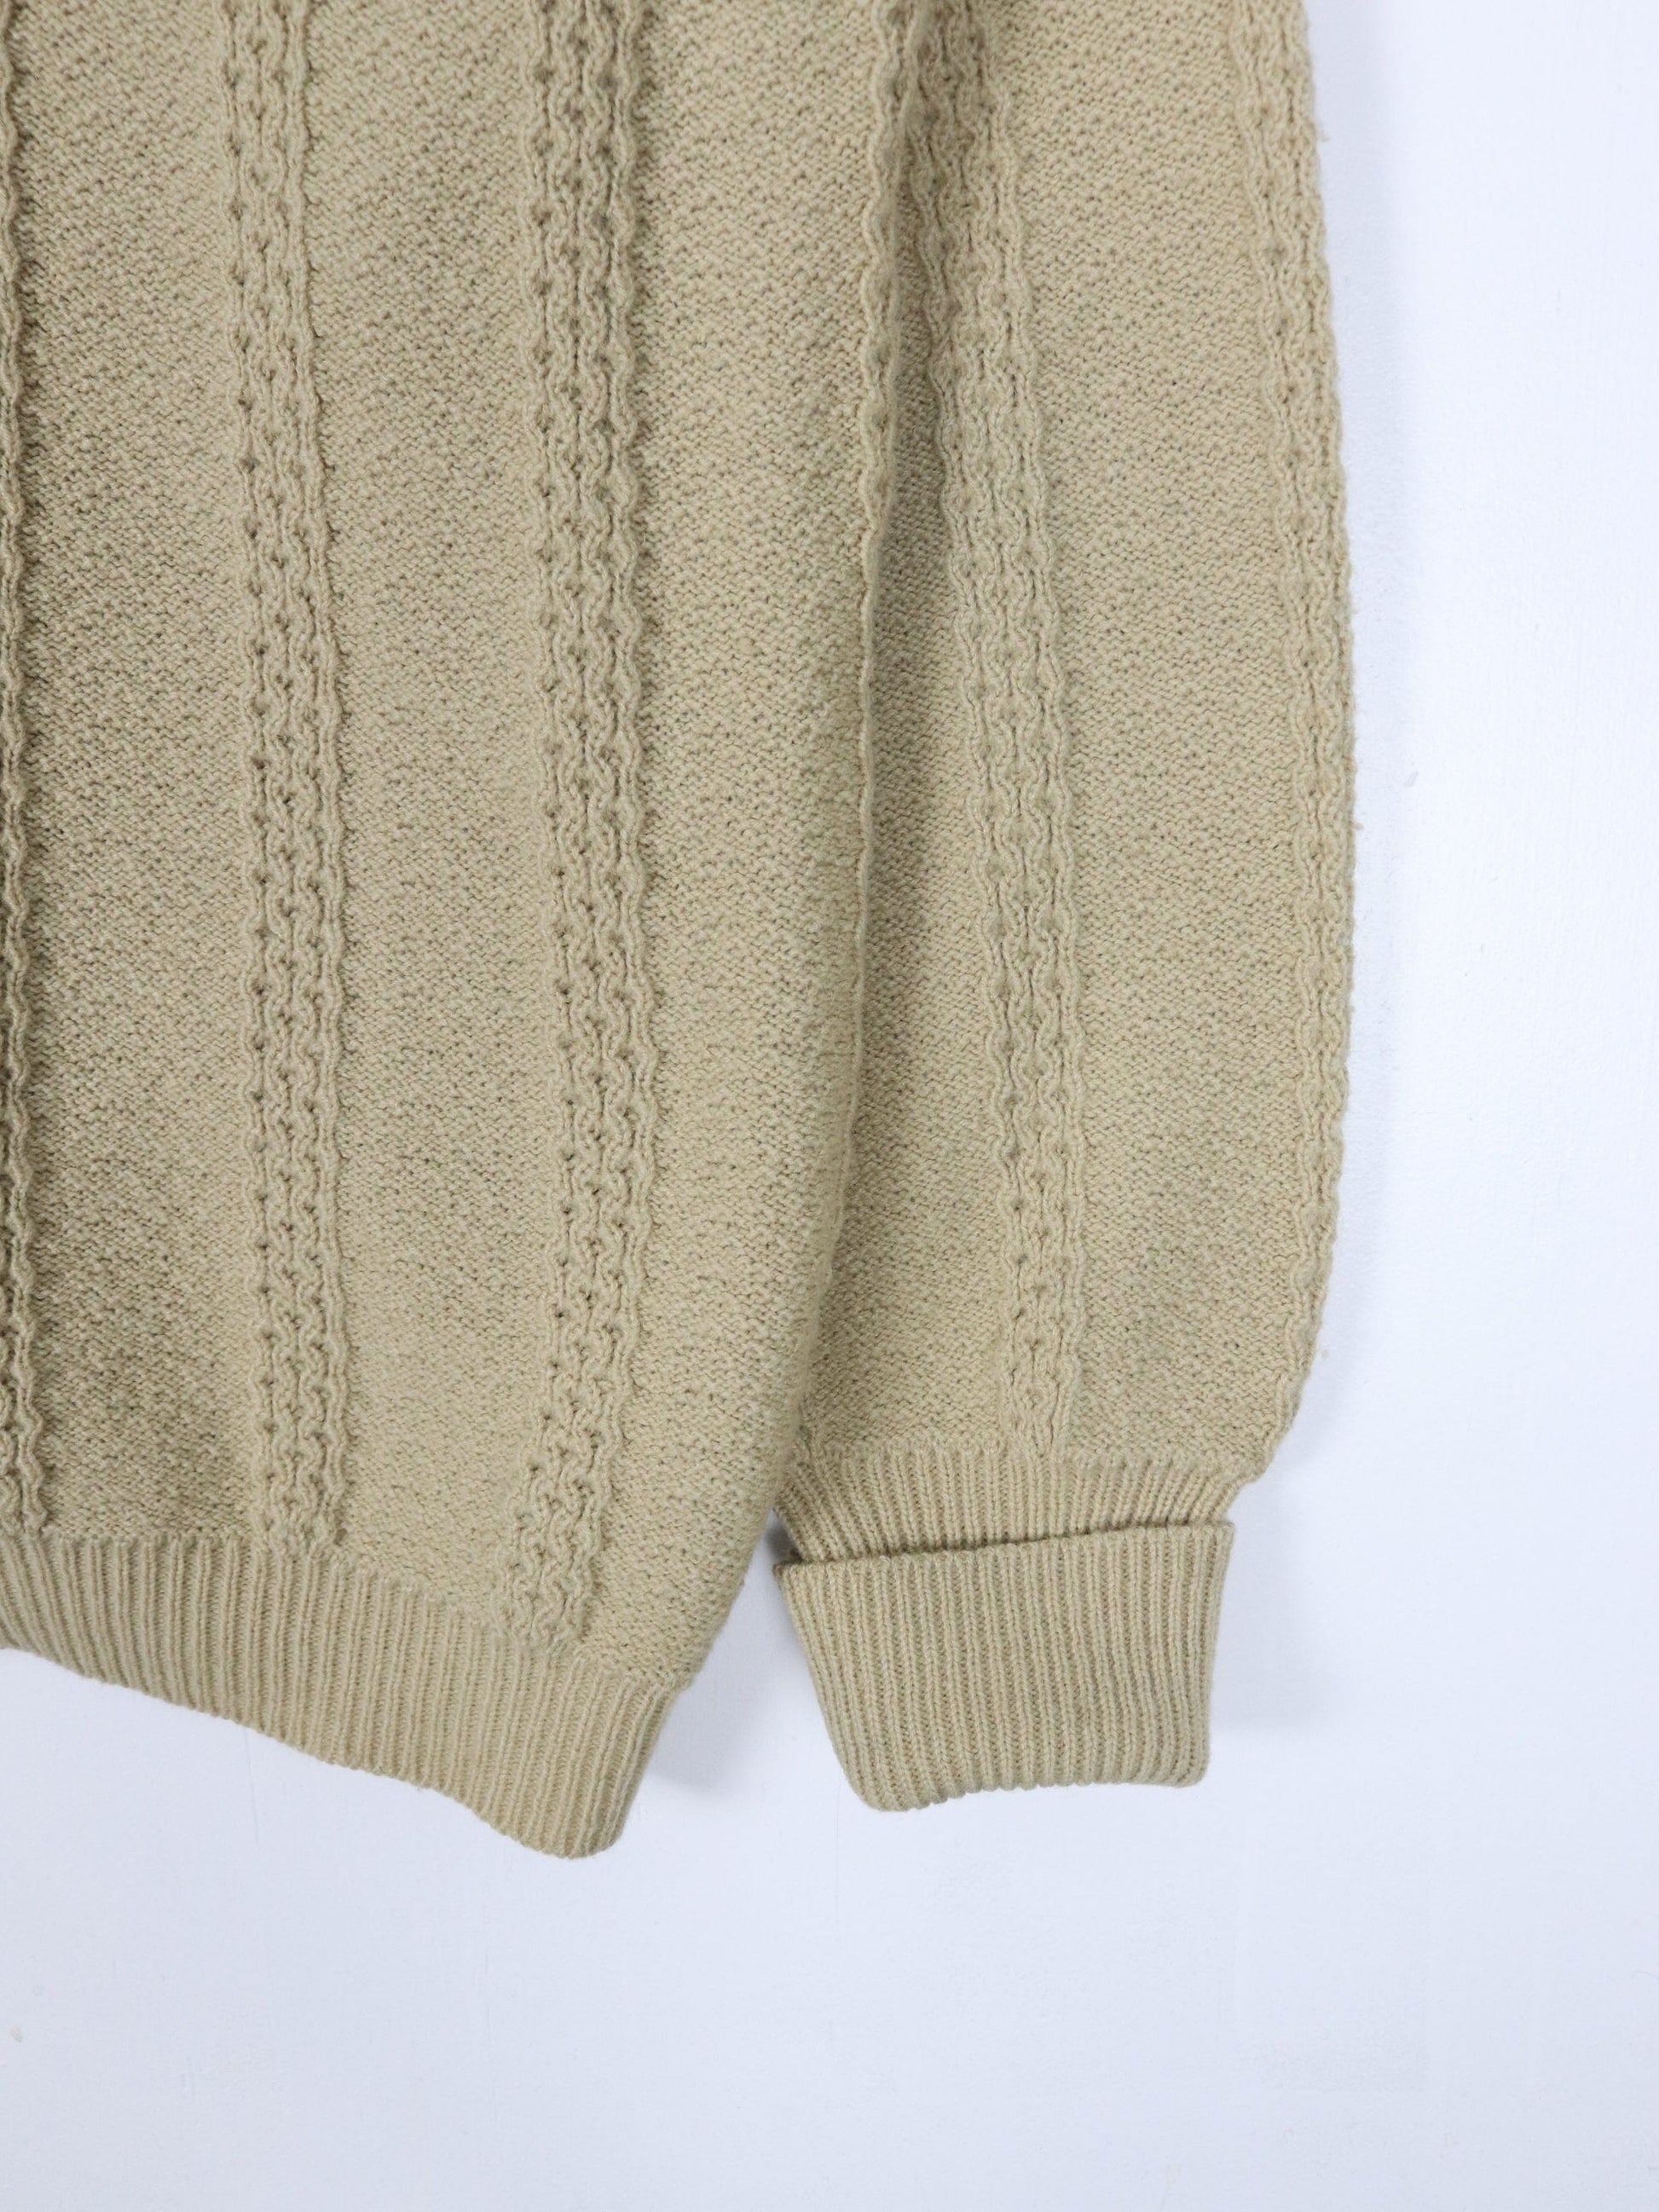 Other Knitwear Vintage Cardigan Sweater Mens Large Brown Knit Sweatshirt